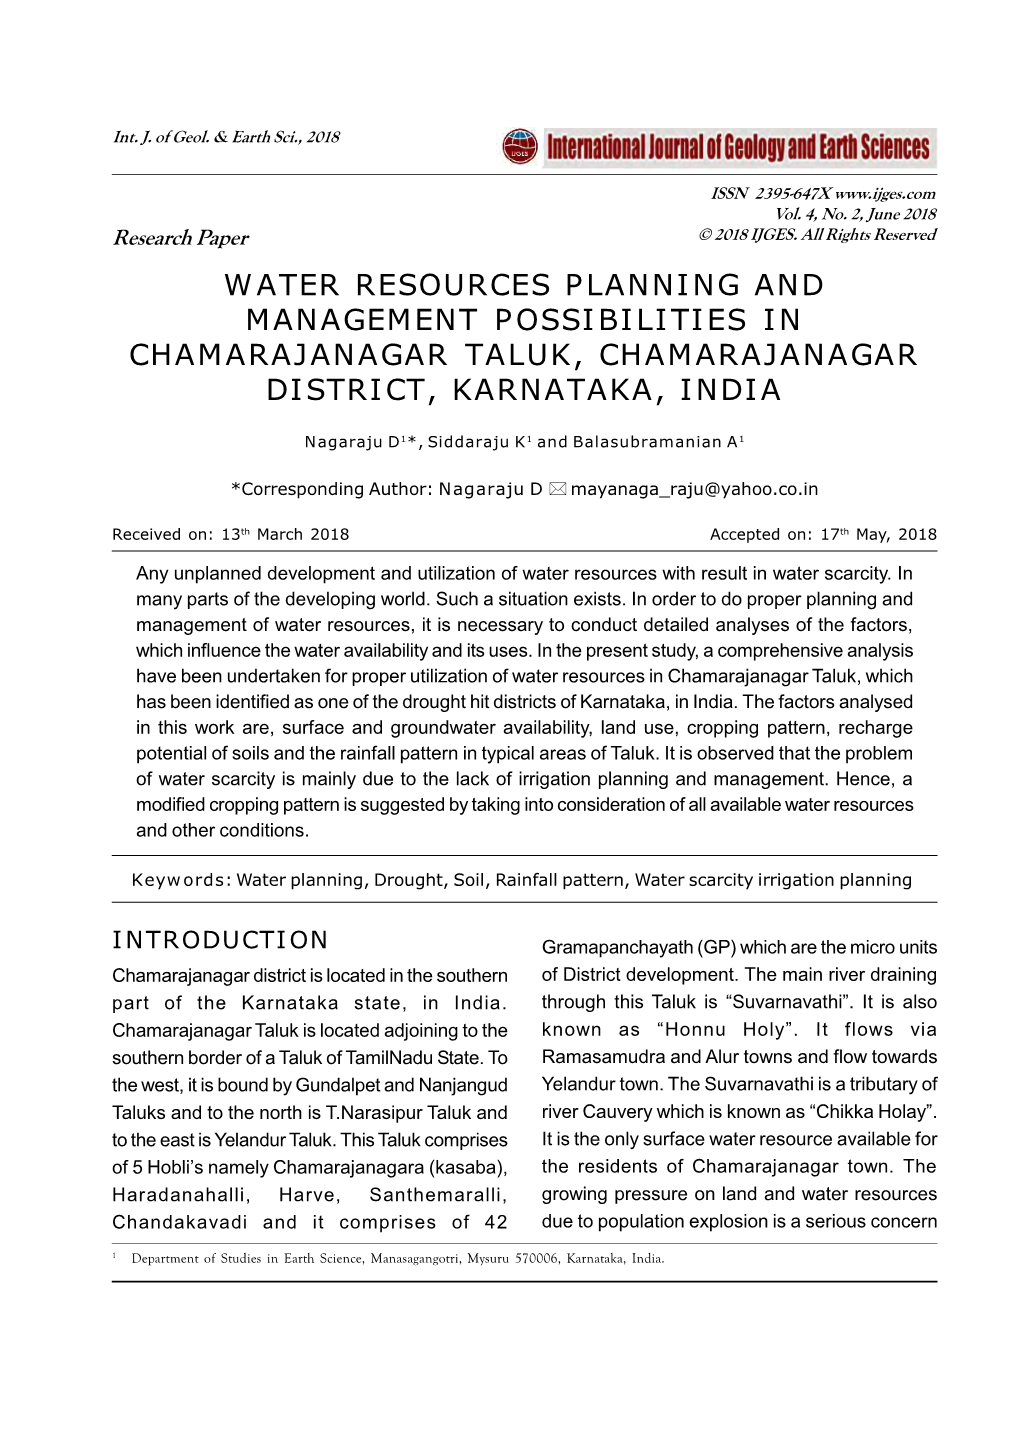 Water Resources Planning and Management Possibilities in Chamarajanagar Taluk, Chamarajanagar District, Karnataka, India